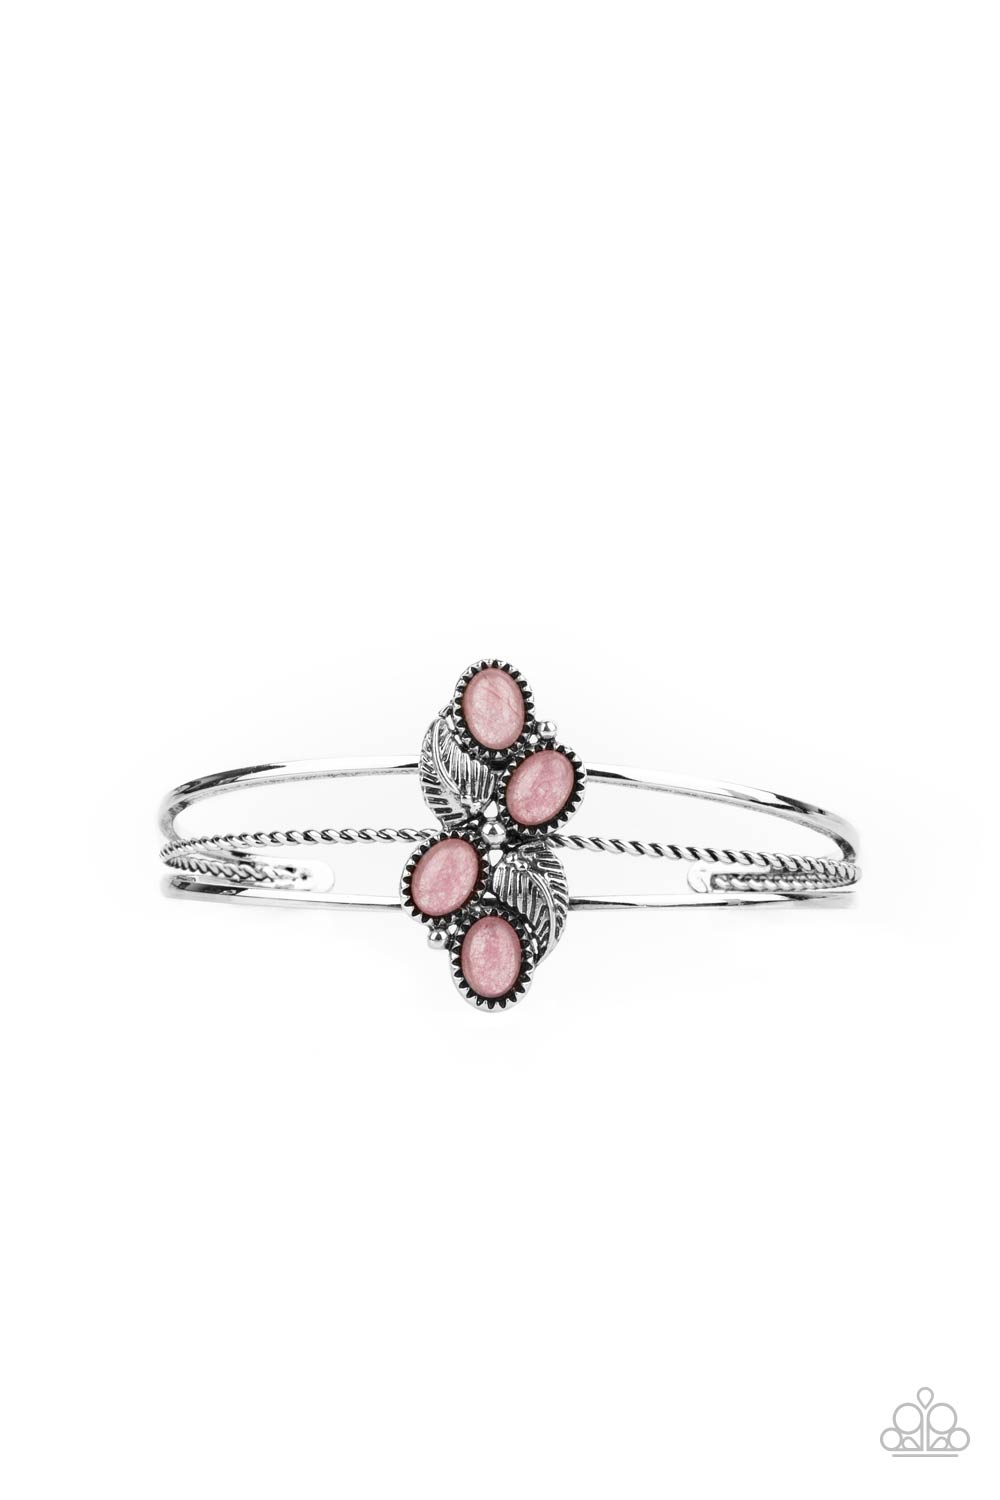 Eco Enthusiast - Pink moonstone cuff bracelet